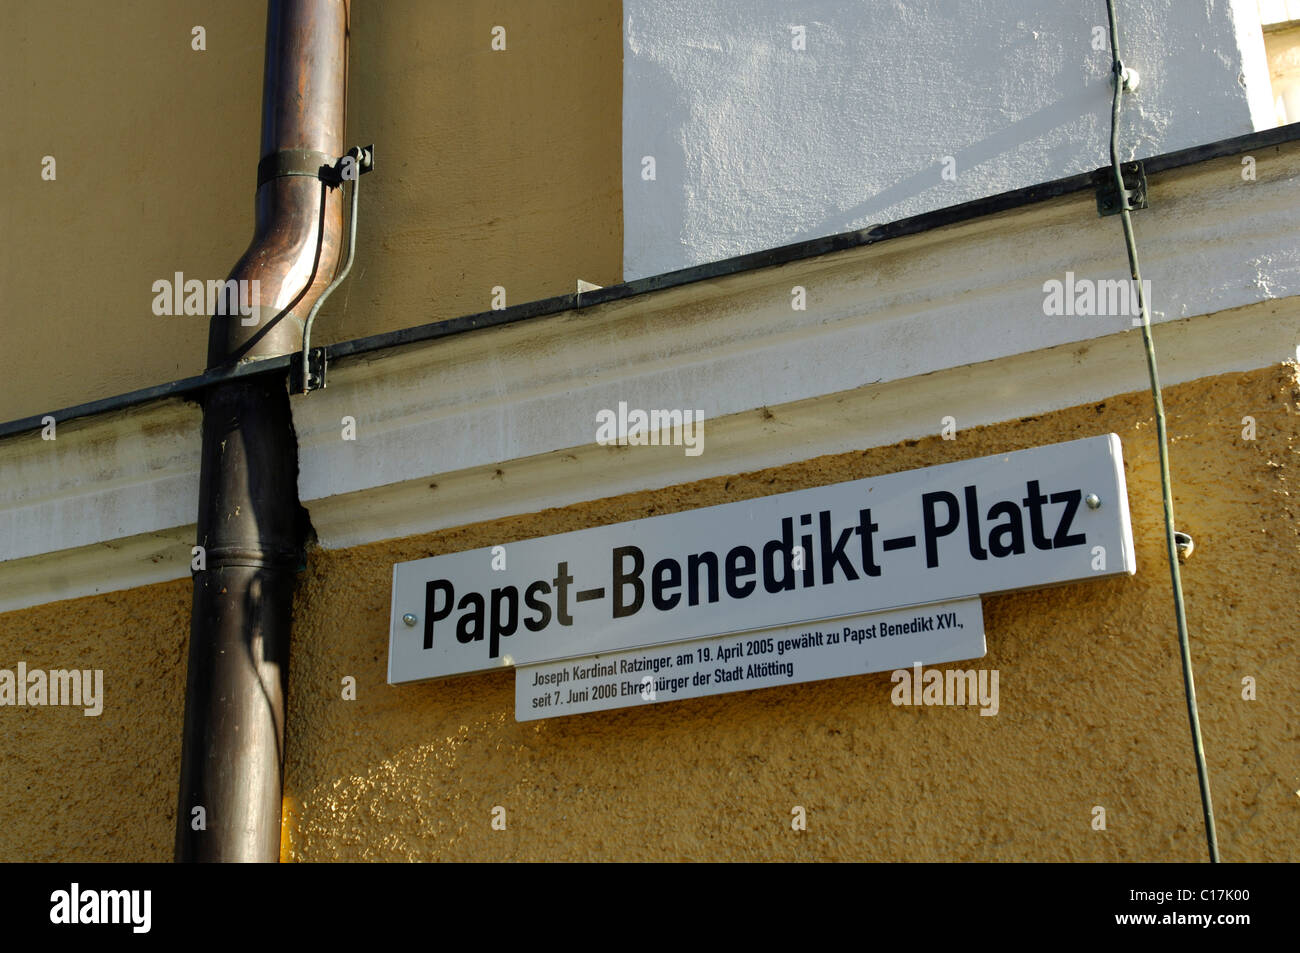 Papst-Benedikt-Platz, street sign, Altoetting, Chiemgau, Bavaria, Germany, Europe Stock Photo